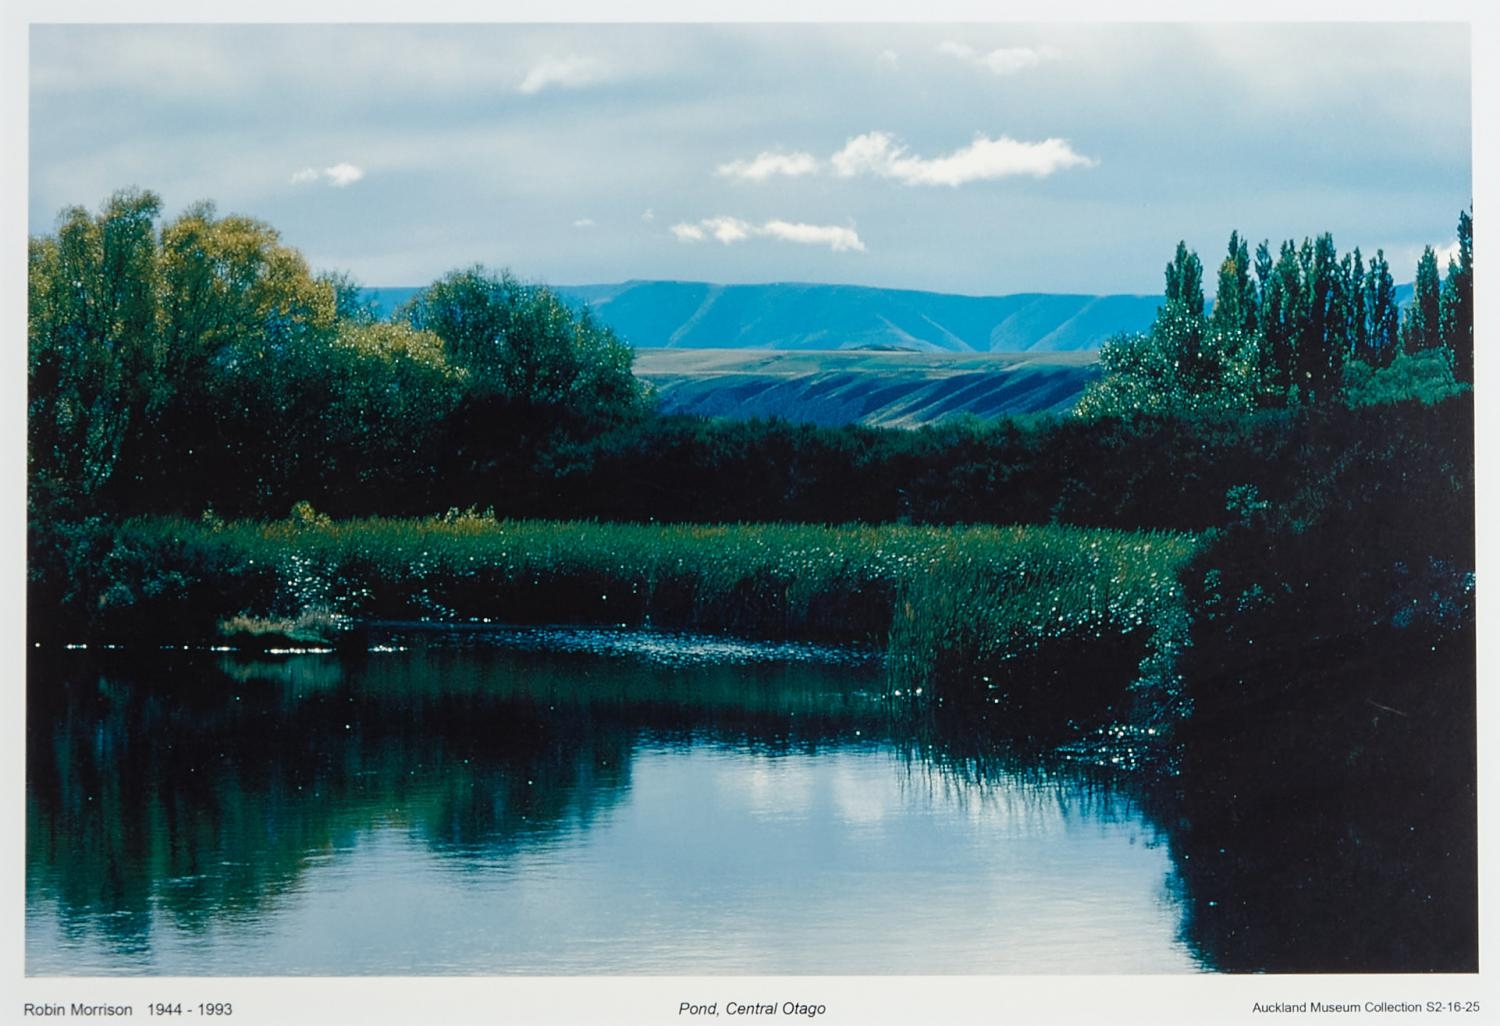 Pond, Central Otago by Robin Morrison